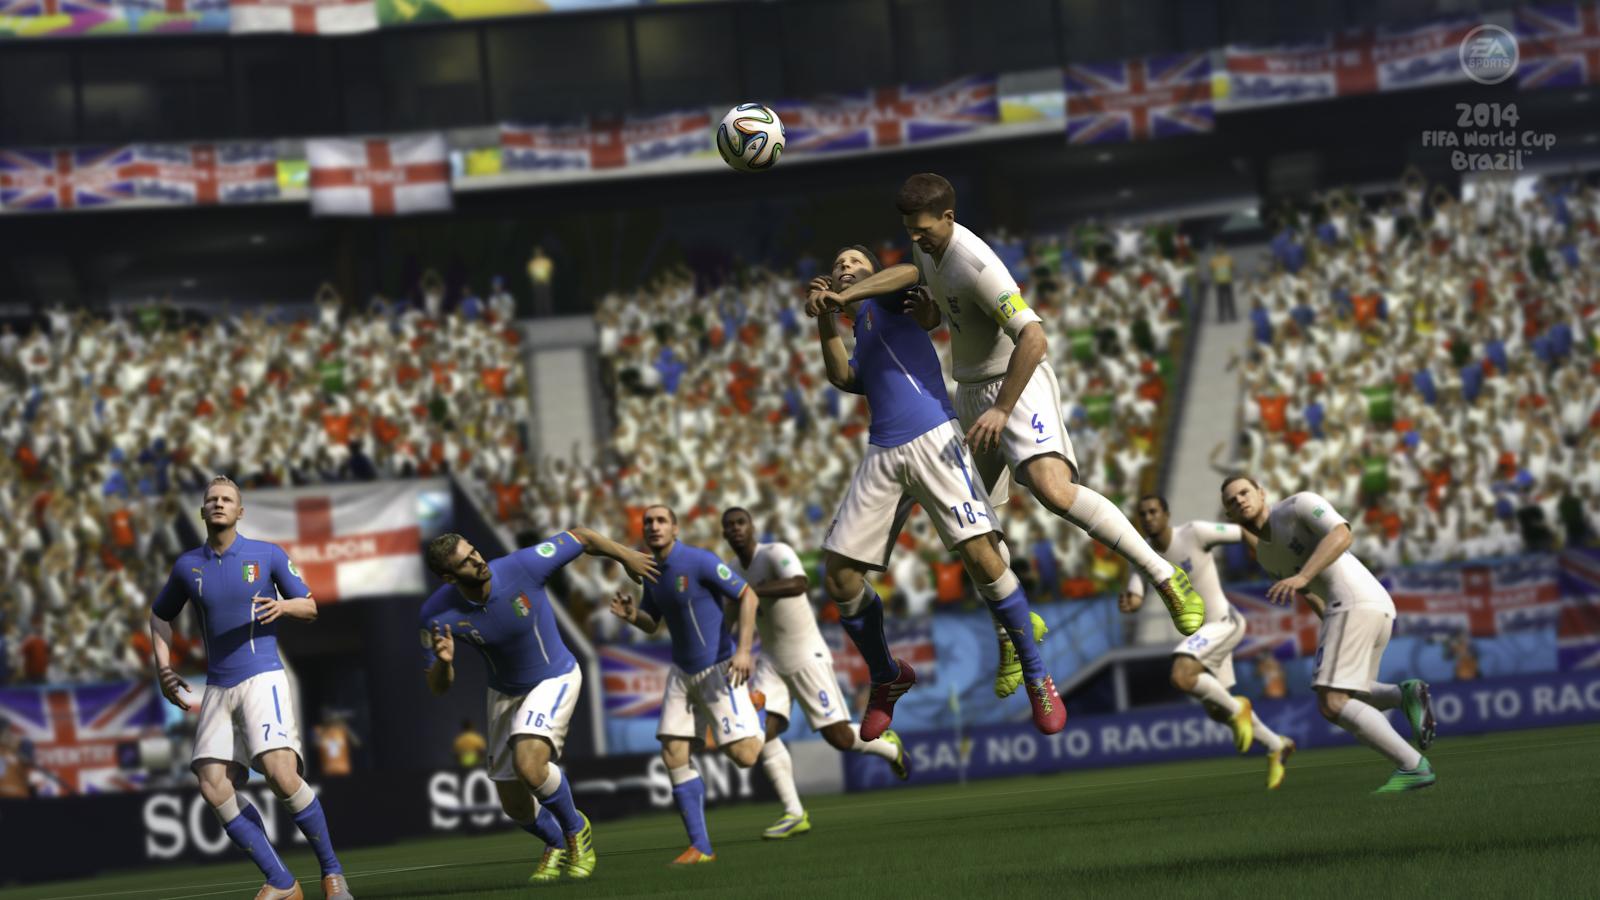 EASPORTS2014FIFAWorldCupBrazil_Xbox360_PS3_England_vs_Italy_header_WM